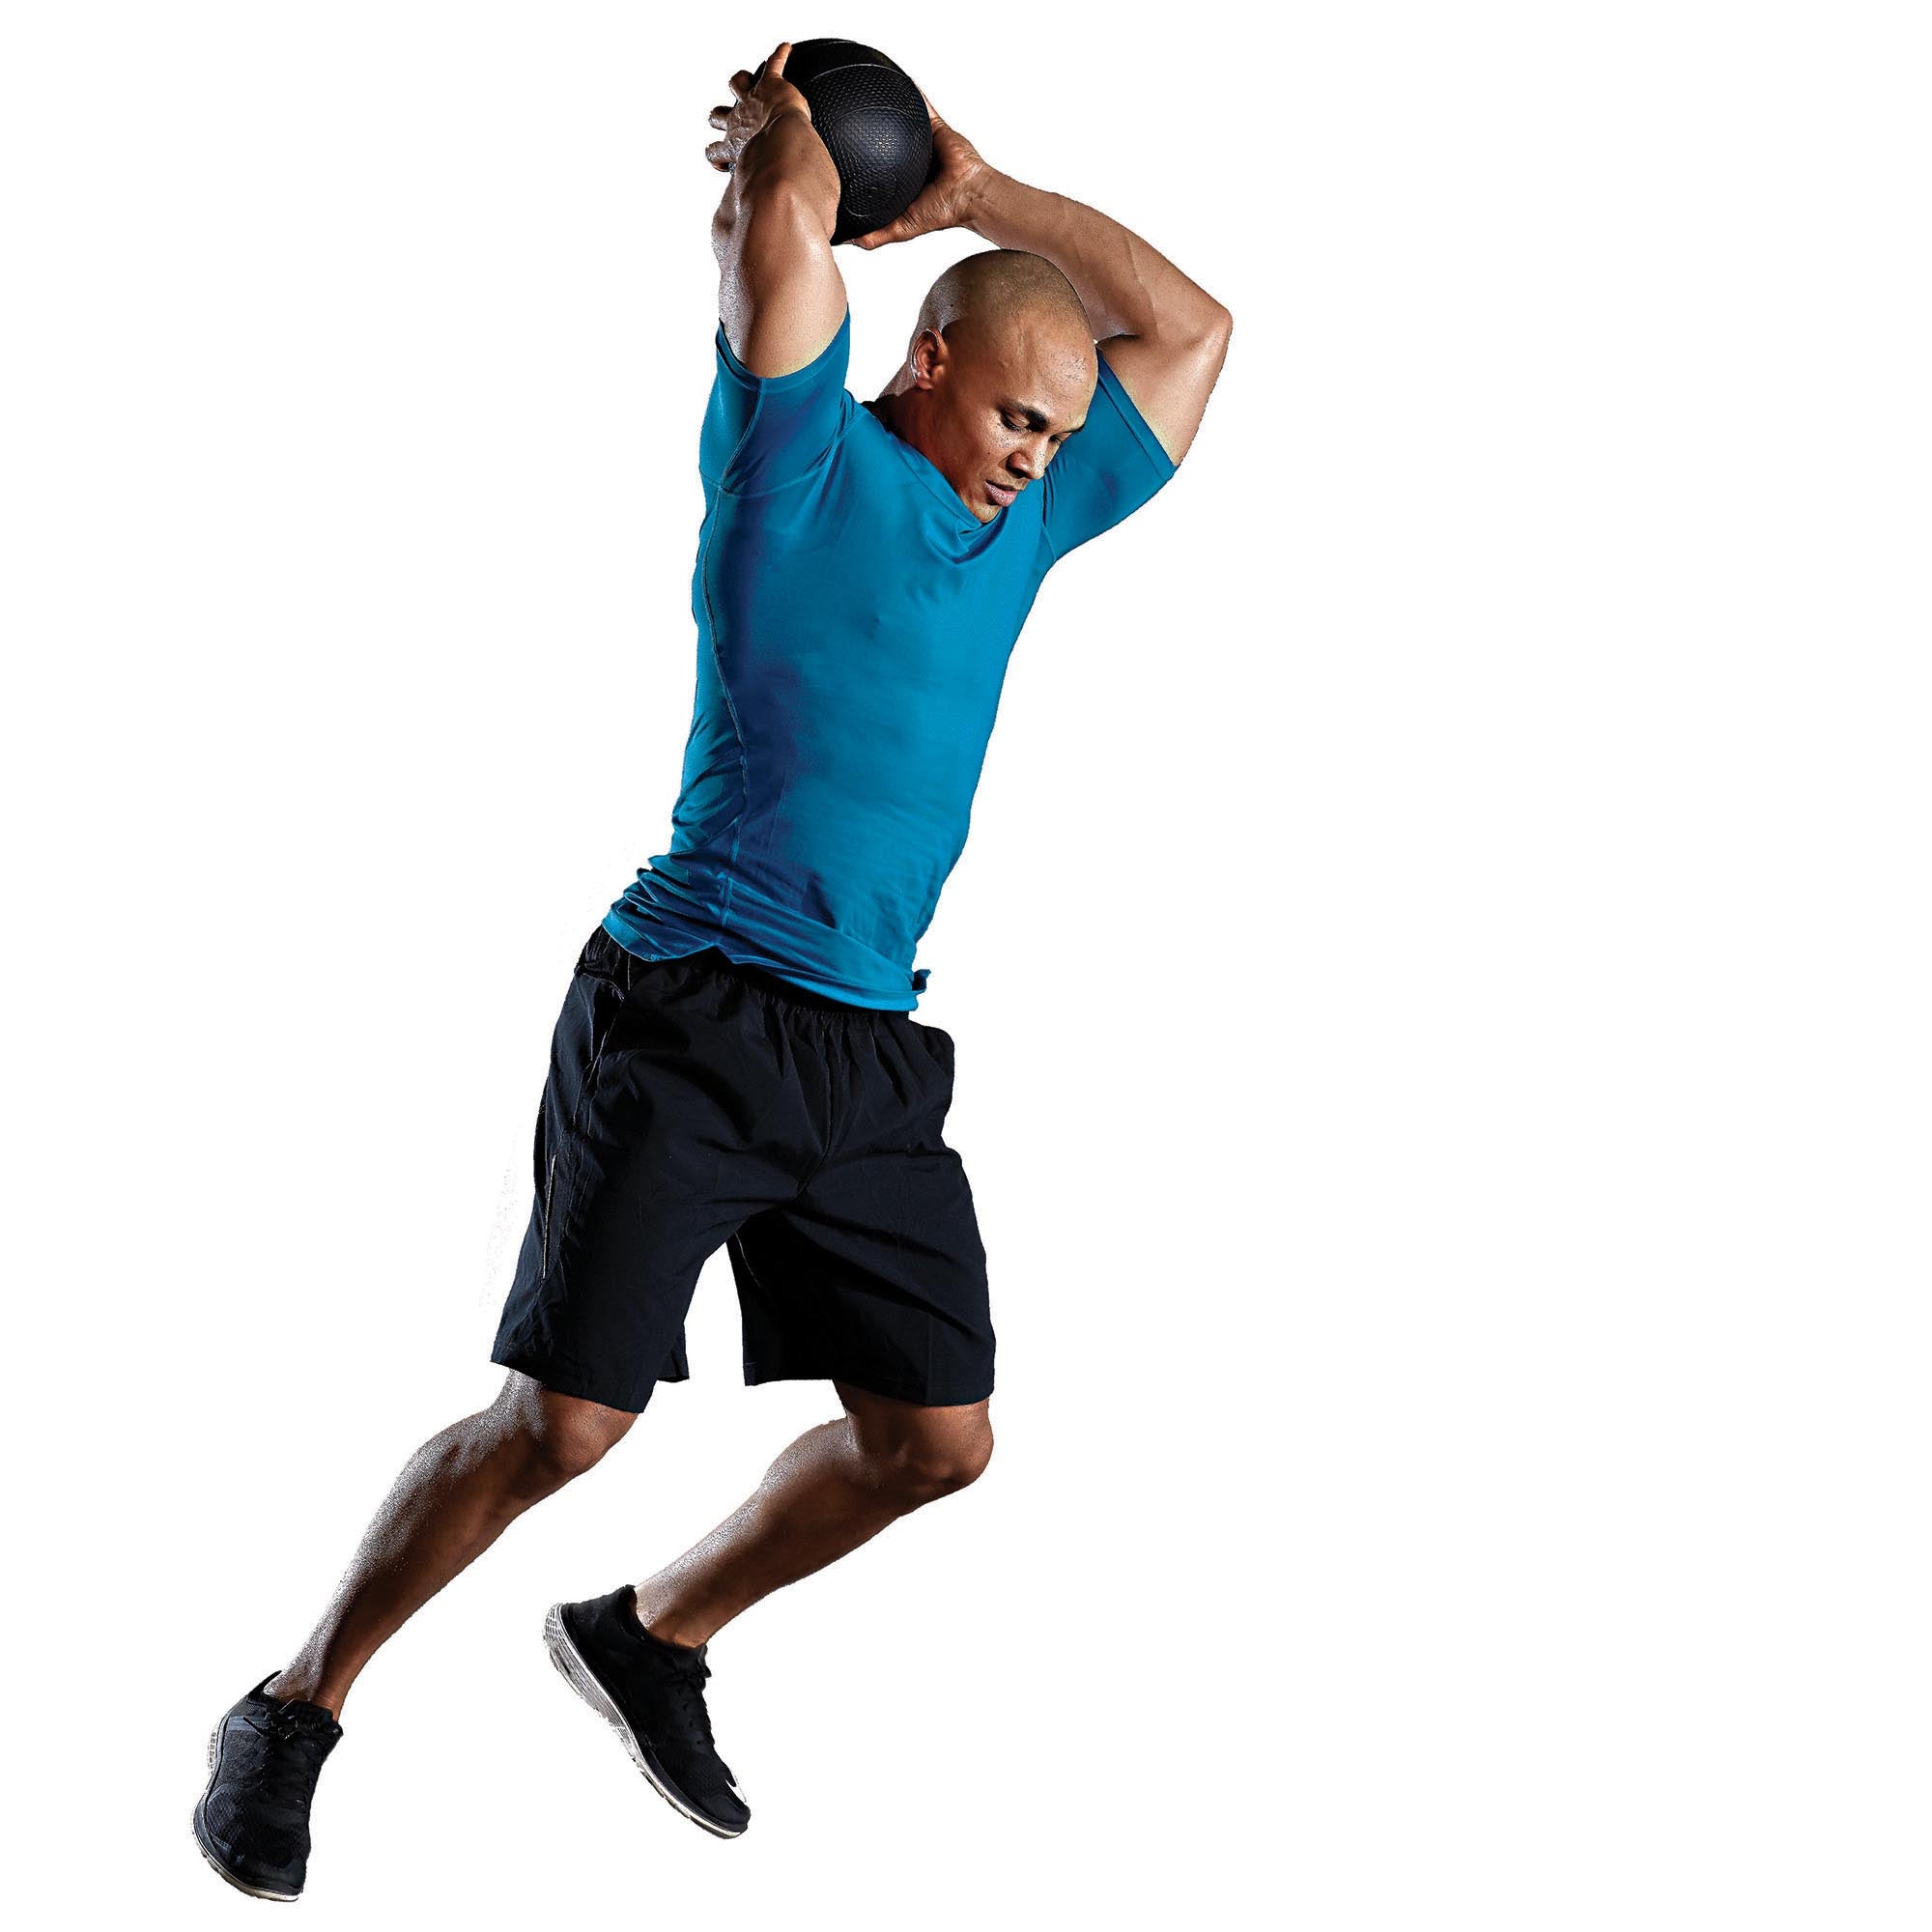 Medicine Ball Throw to Chase – WorkoutLabs Exercise Guide